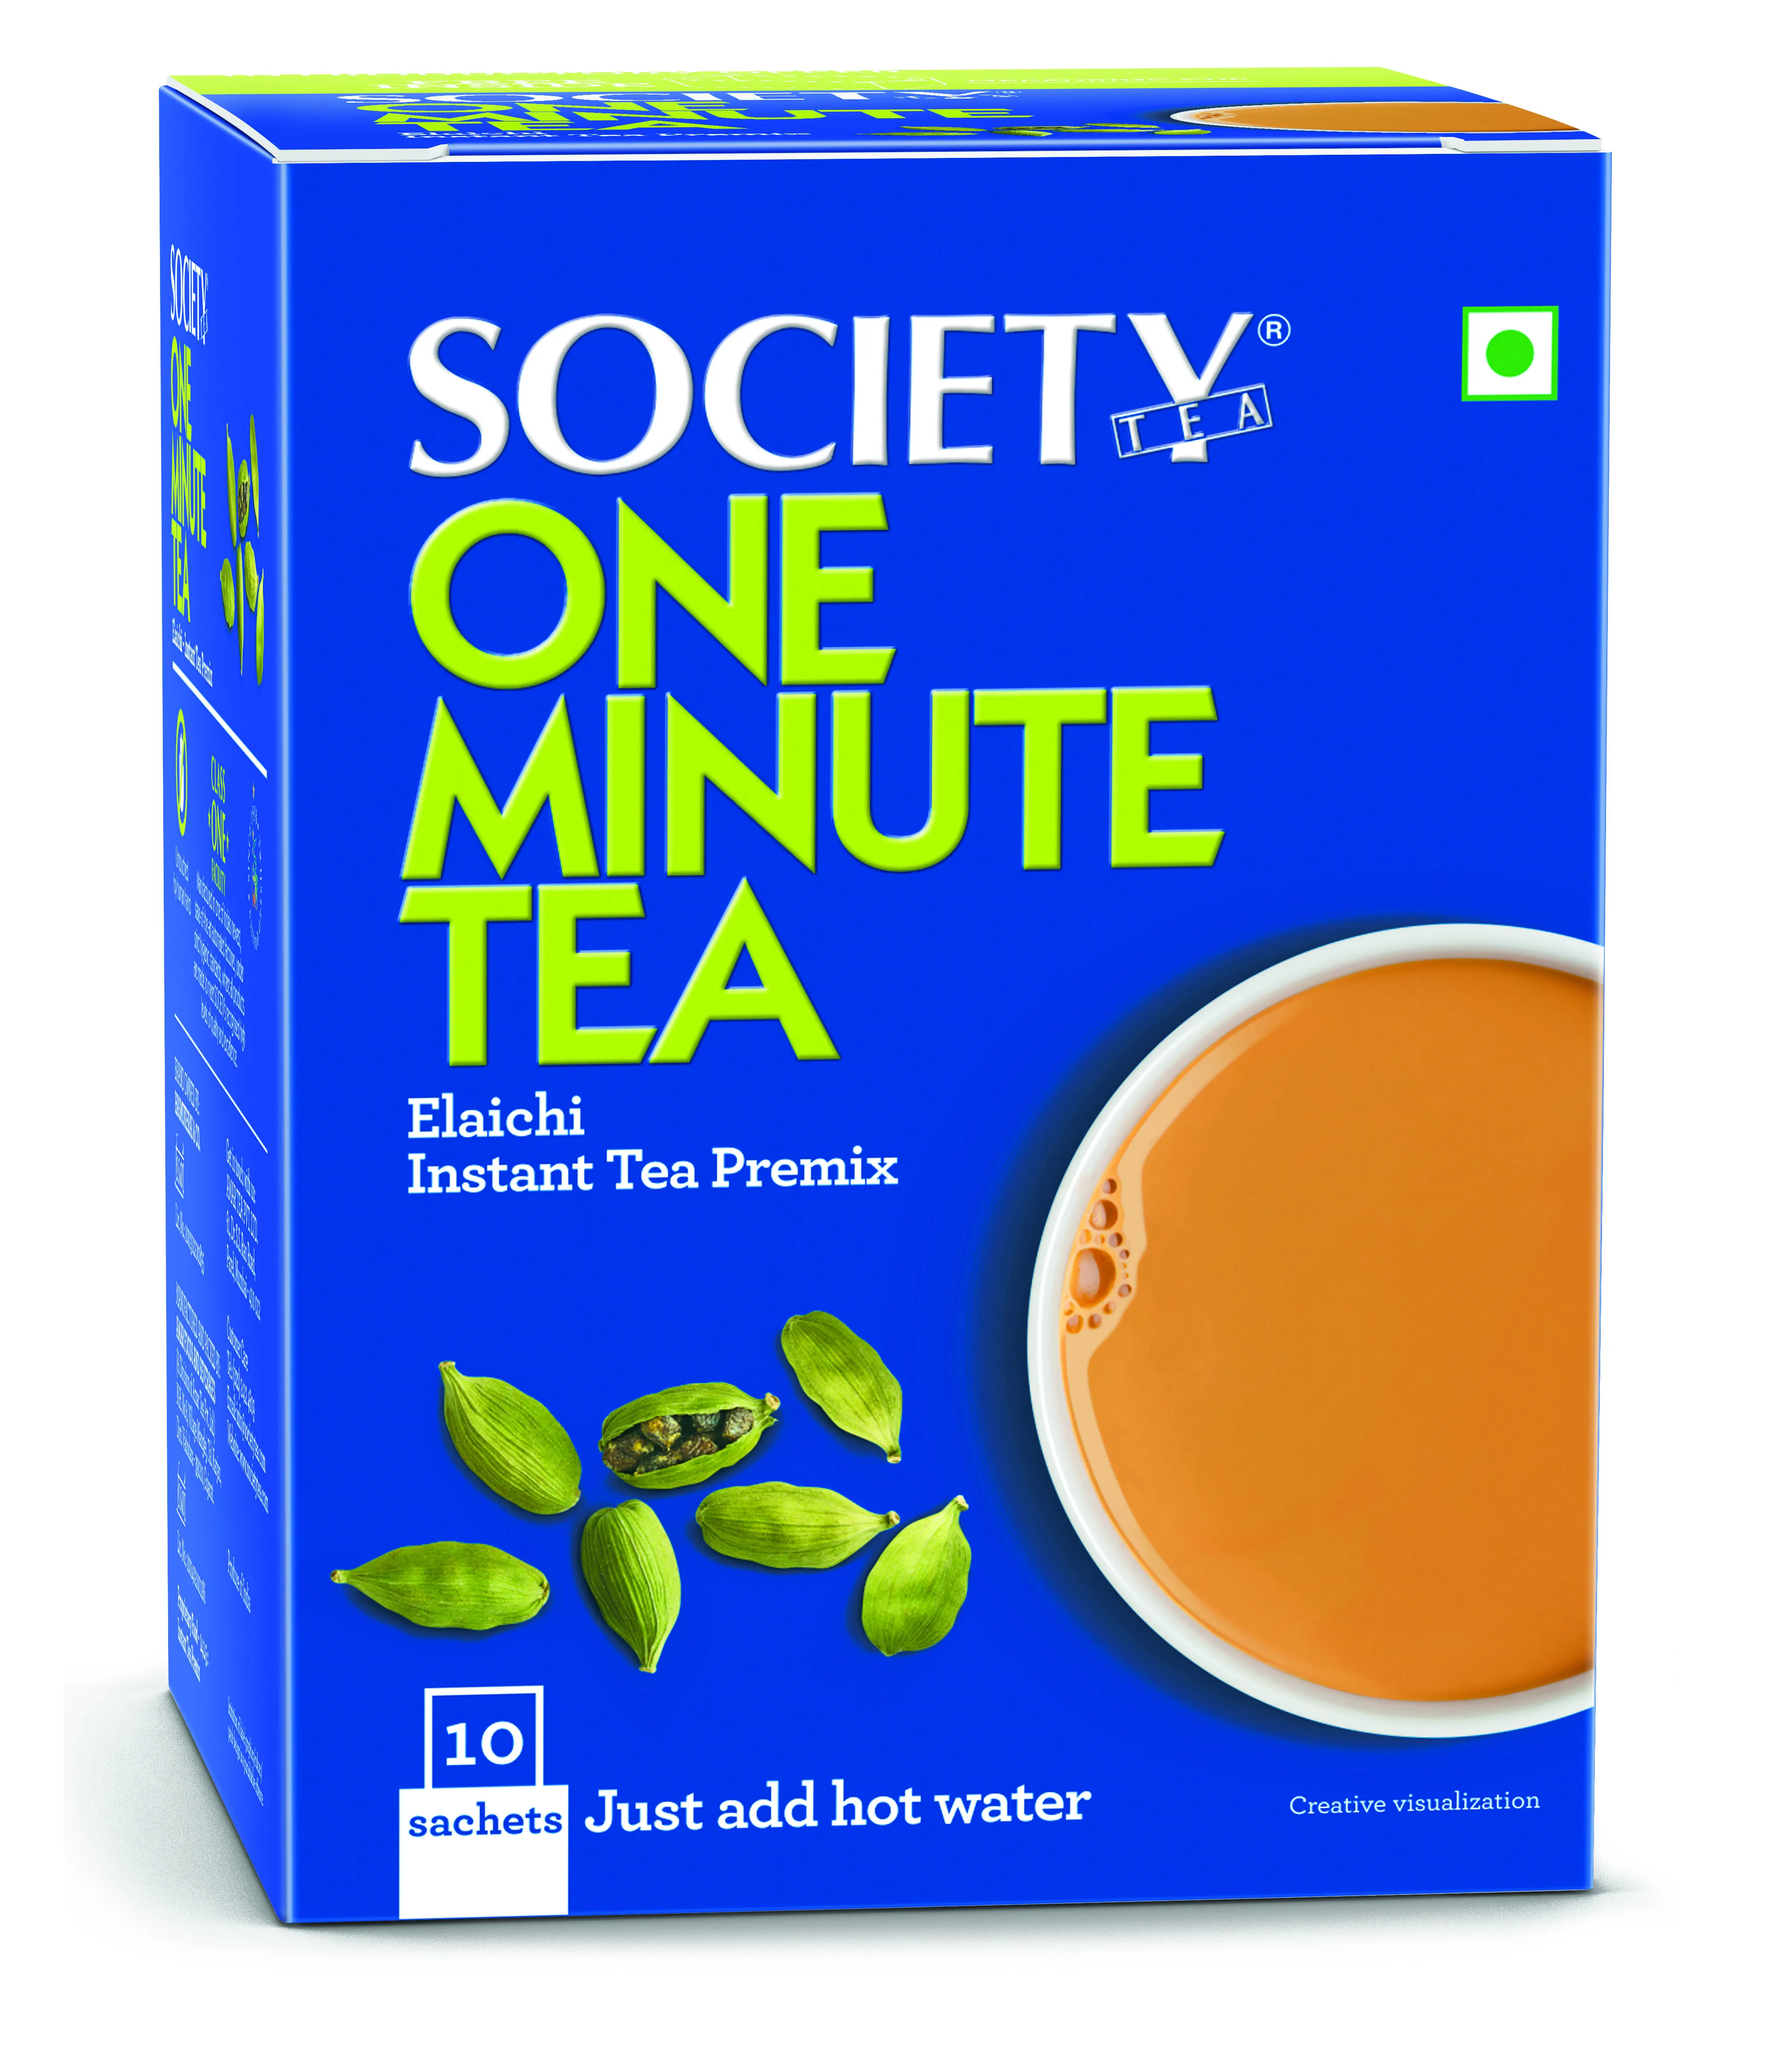 SOCIETY PURE ASSAM LEAF TEA